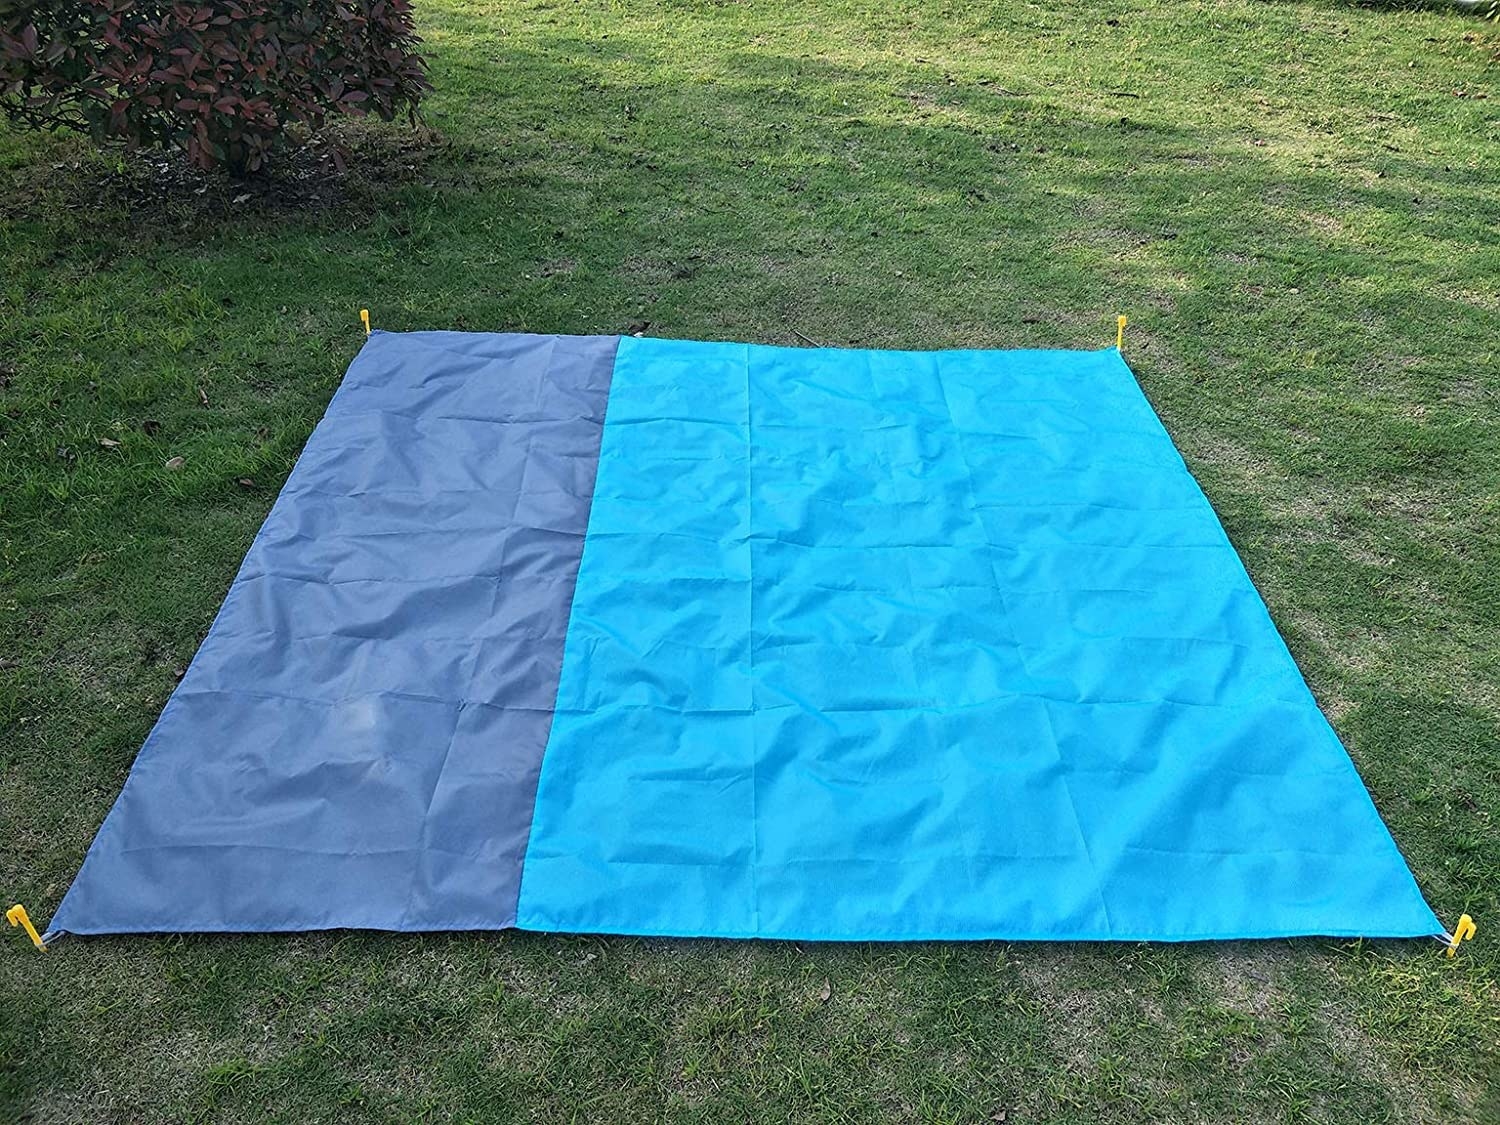 The oversized beach blanket